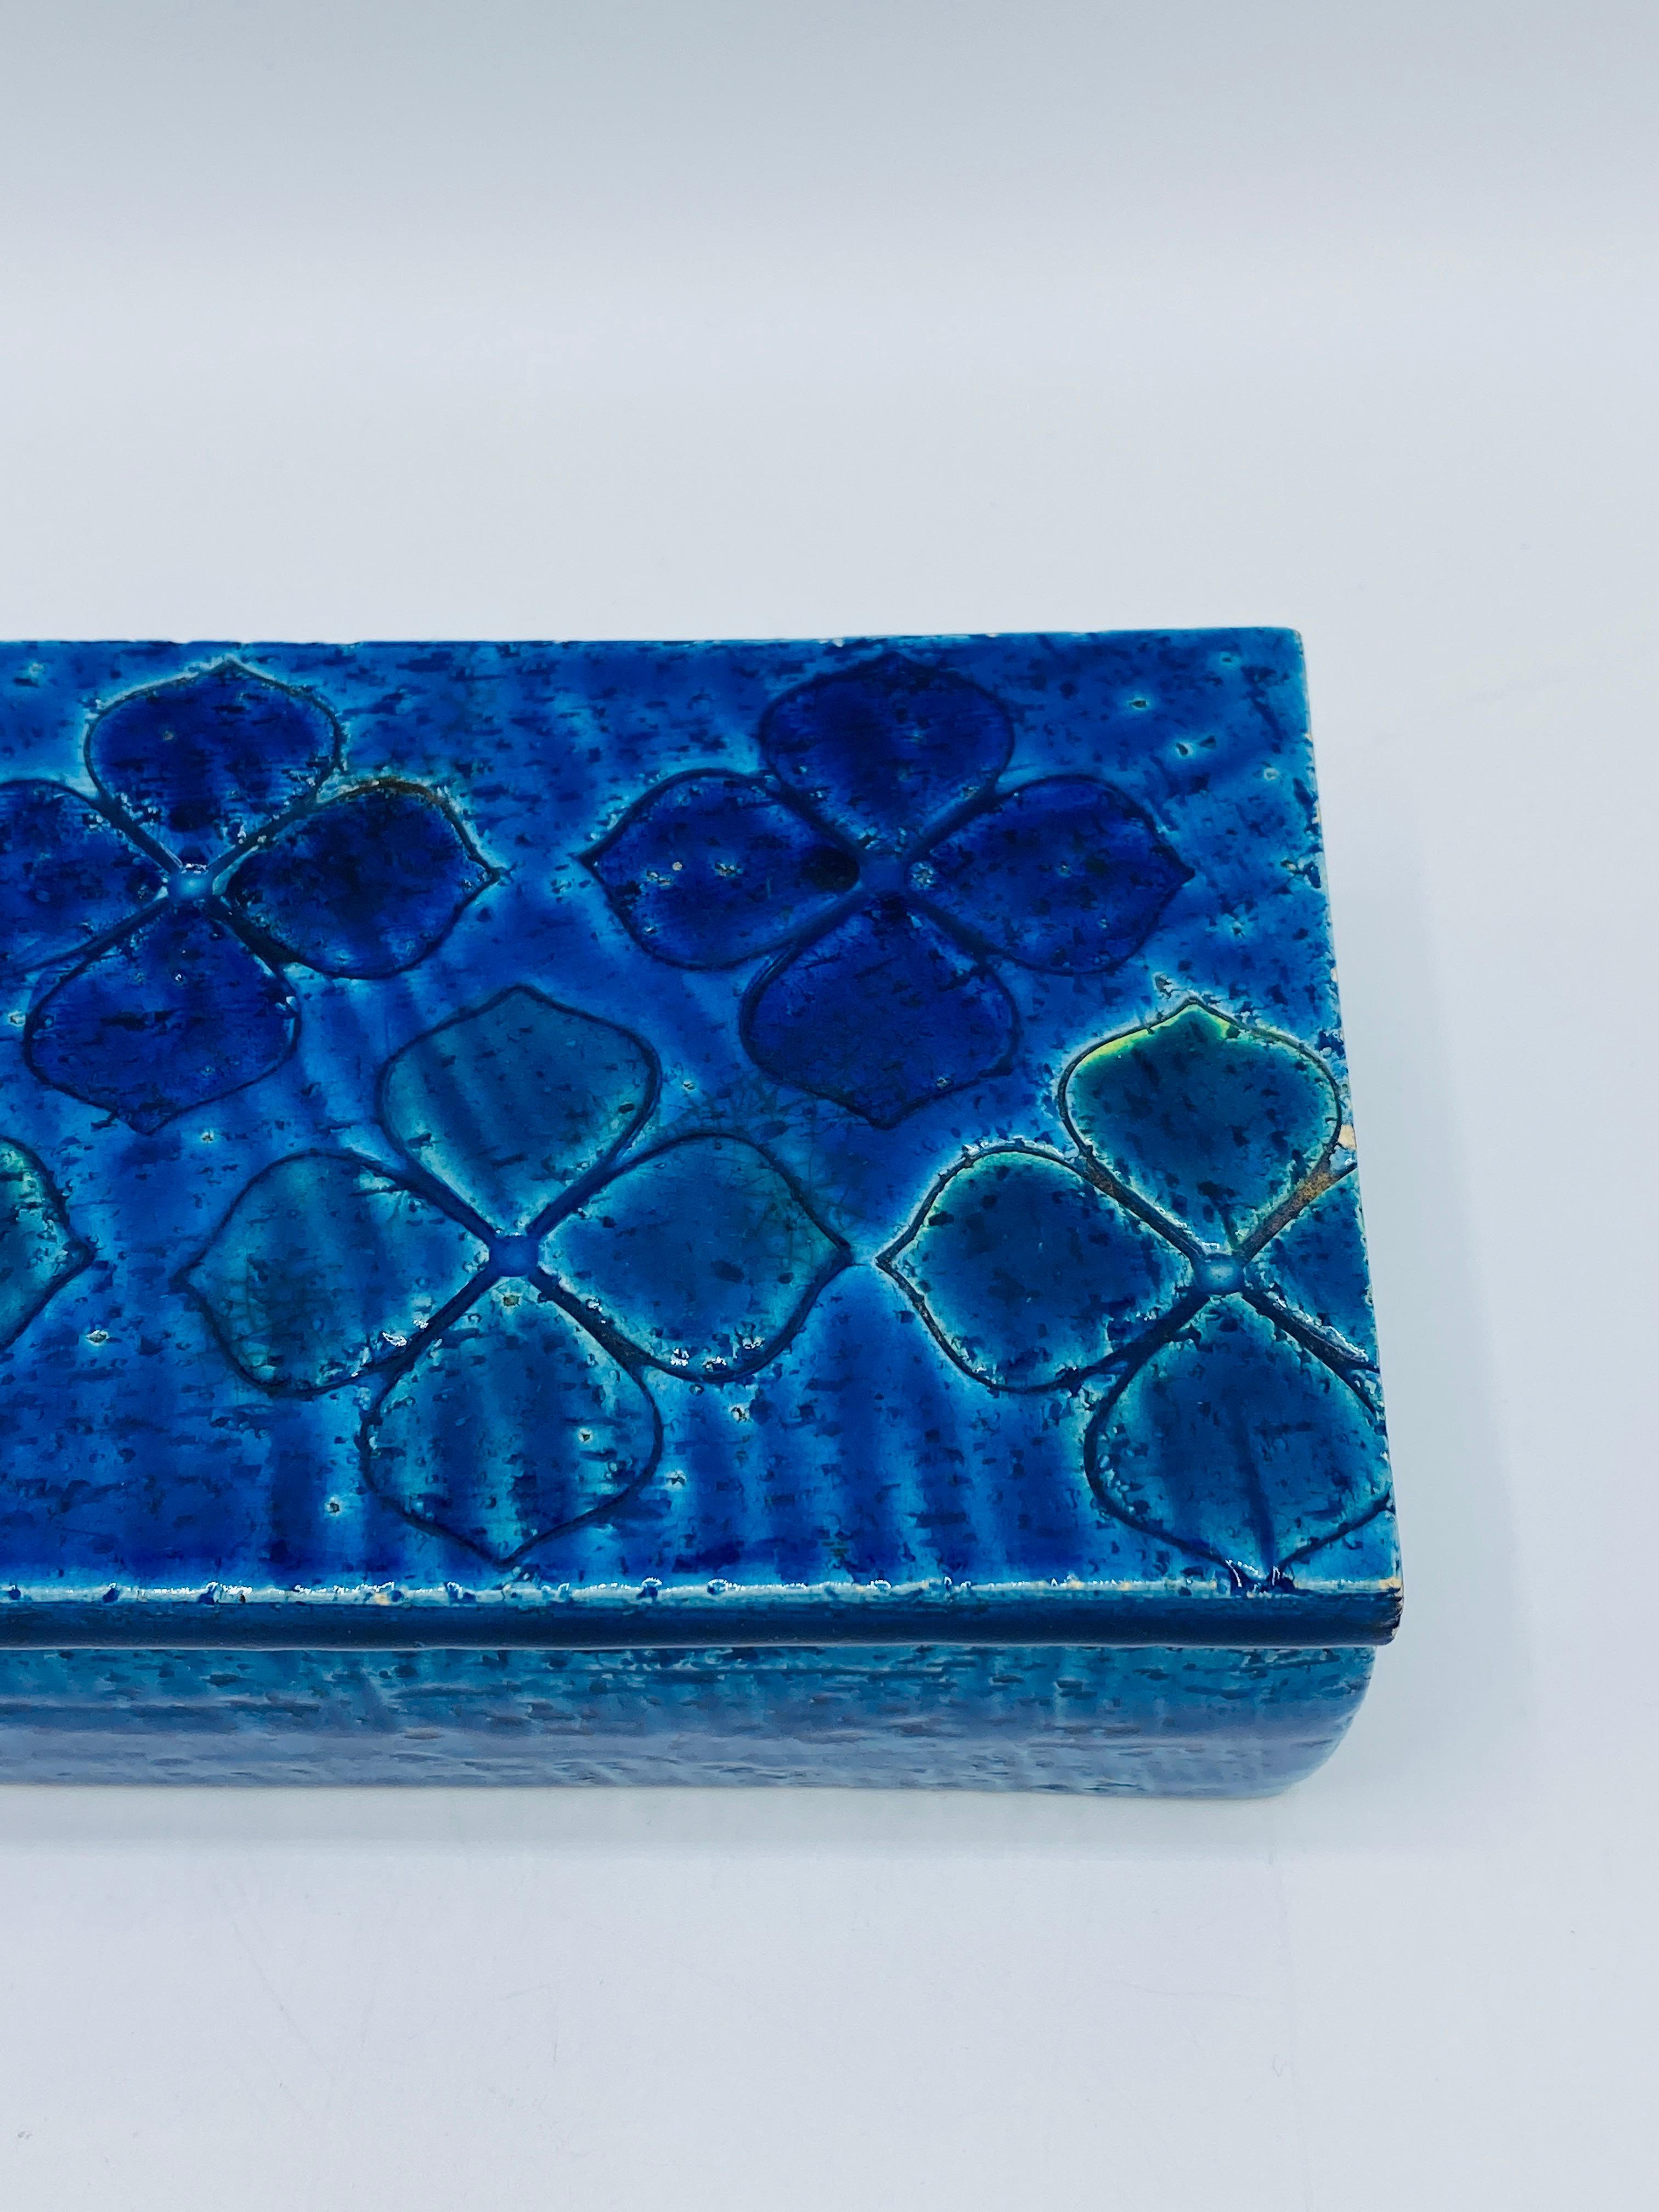 1960s Aldo Londi Bitossi 'Blue Rimini' Clover Box, #10/20 For Sale 4